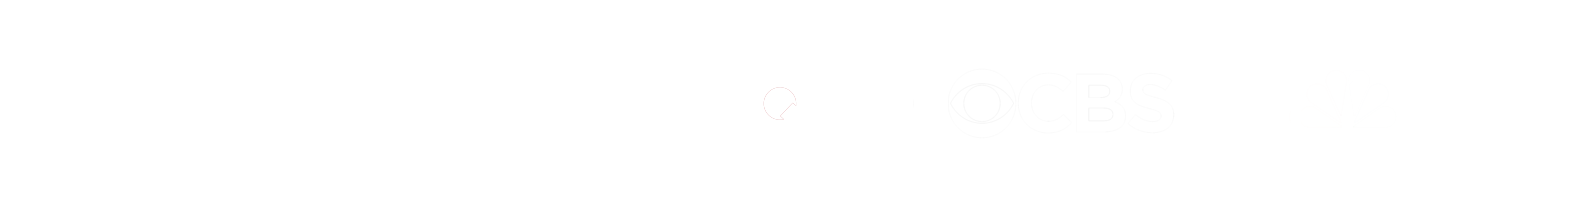 GO WALLET – GO-GETTER